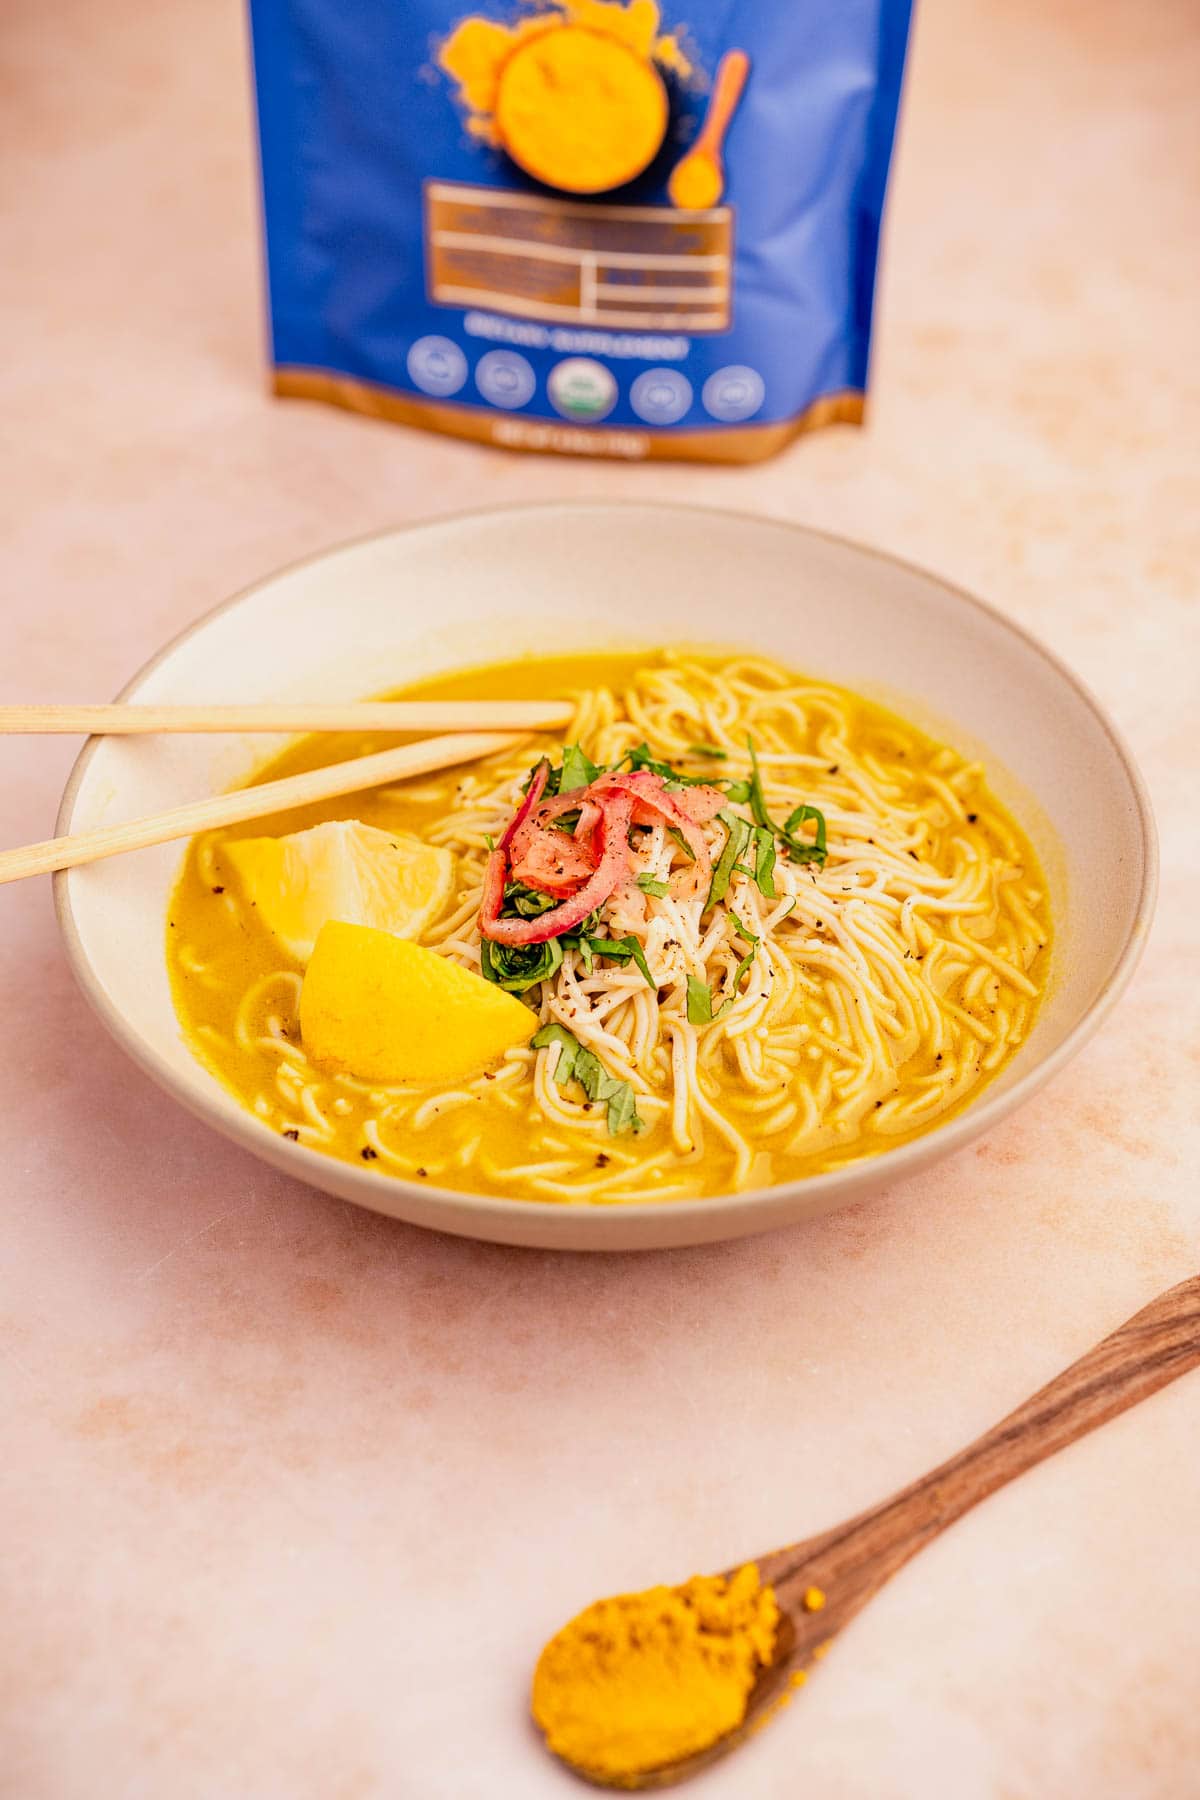 A bowl of golden noodles served with chopsticks.